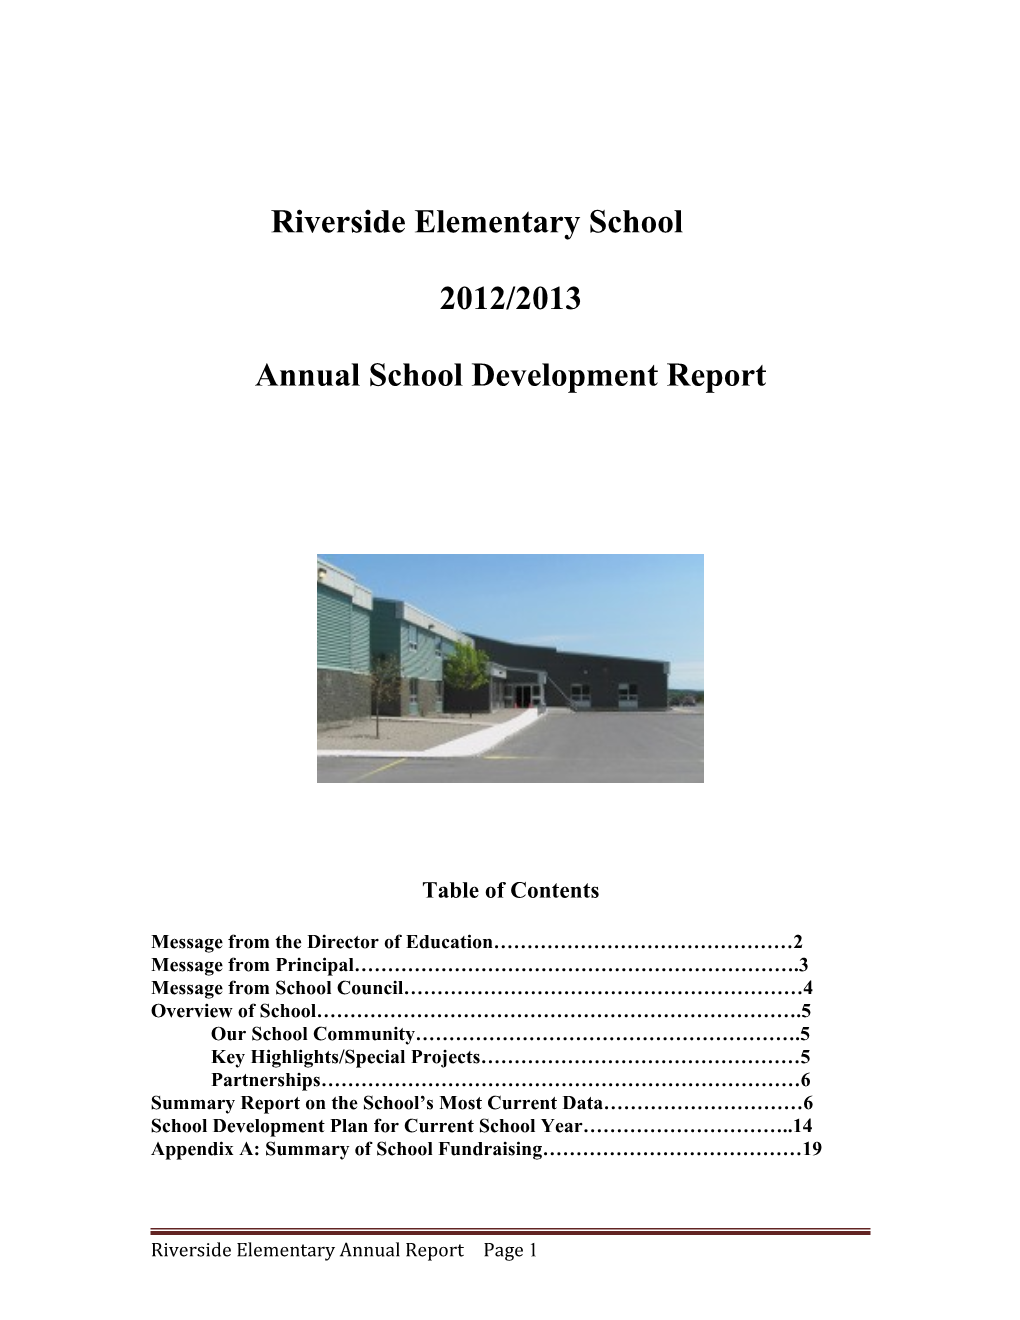 Annual School Development Report